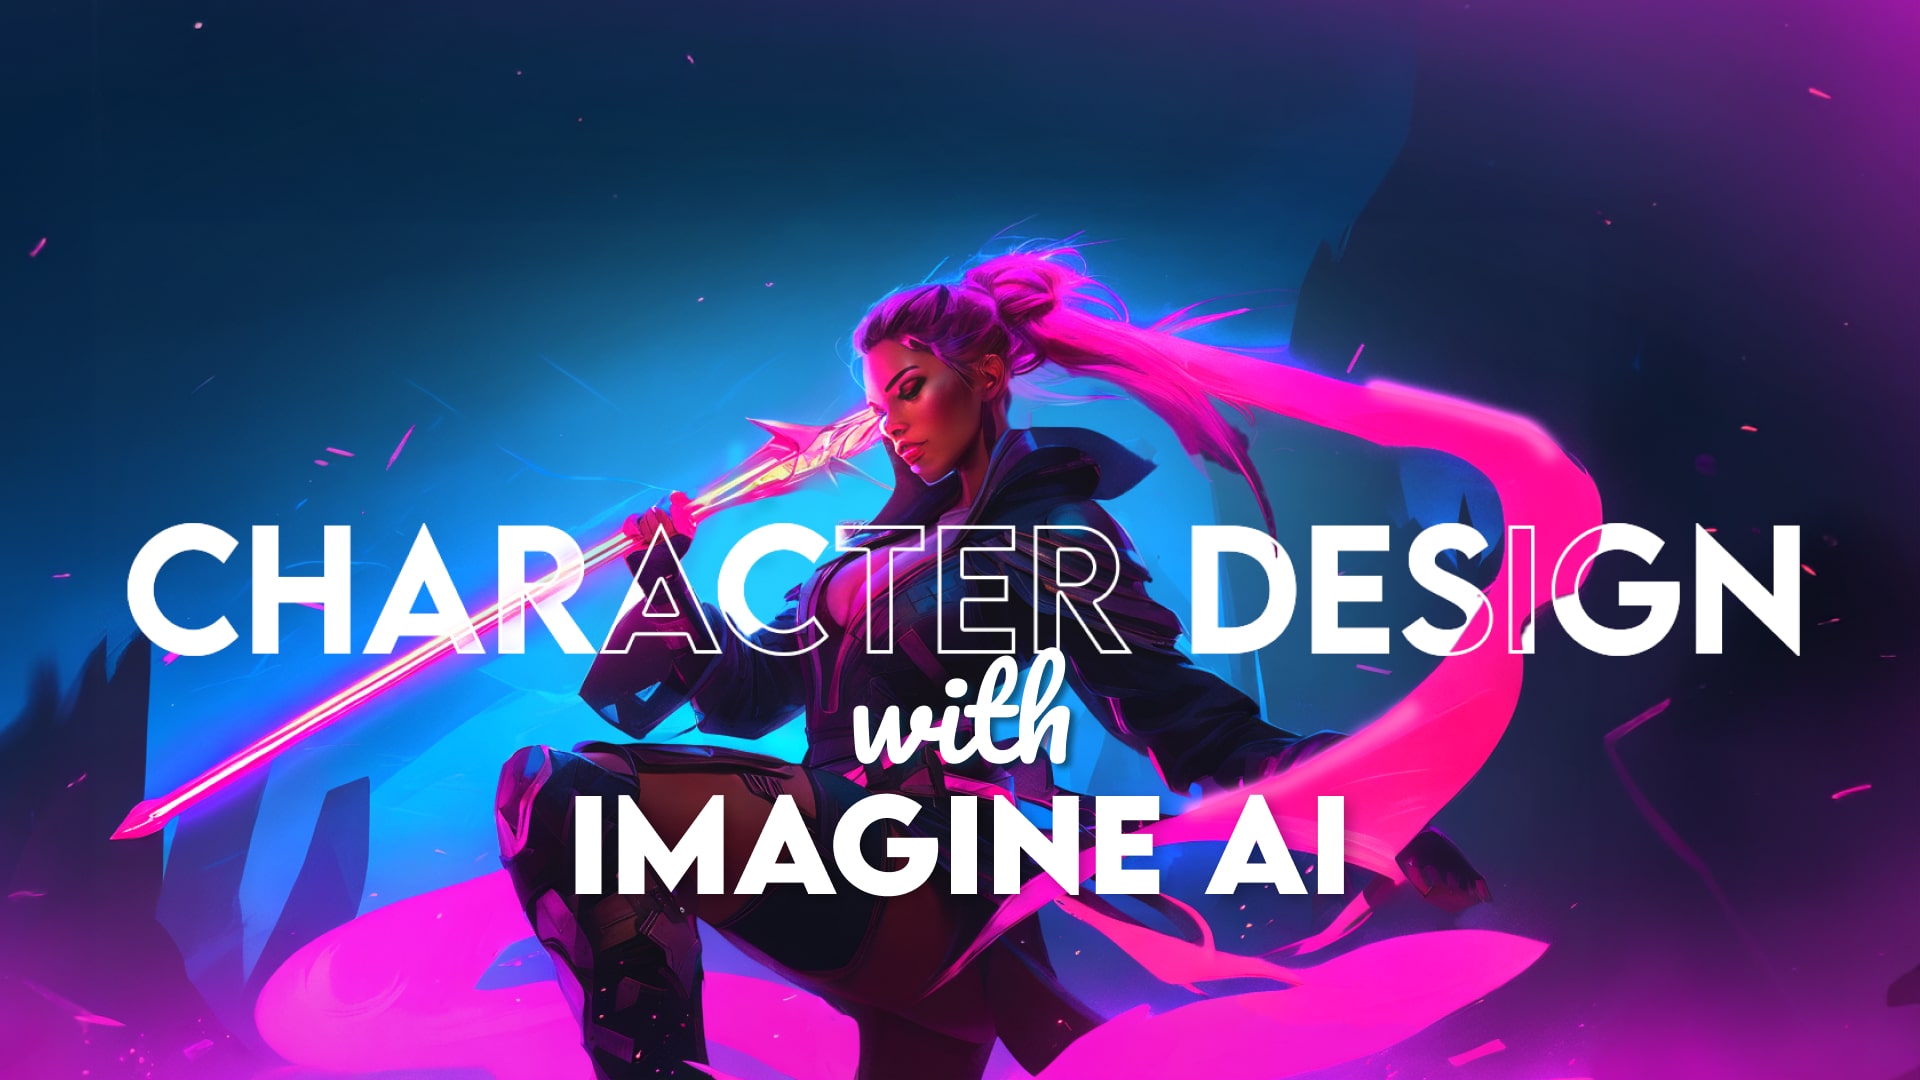 Imagine AI Art Generator Has Made Character Design Easy